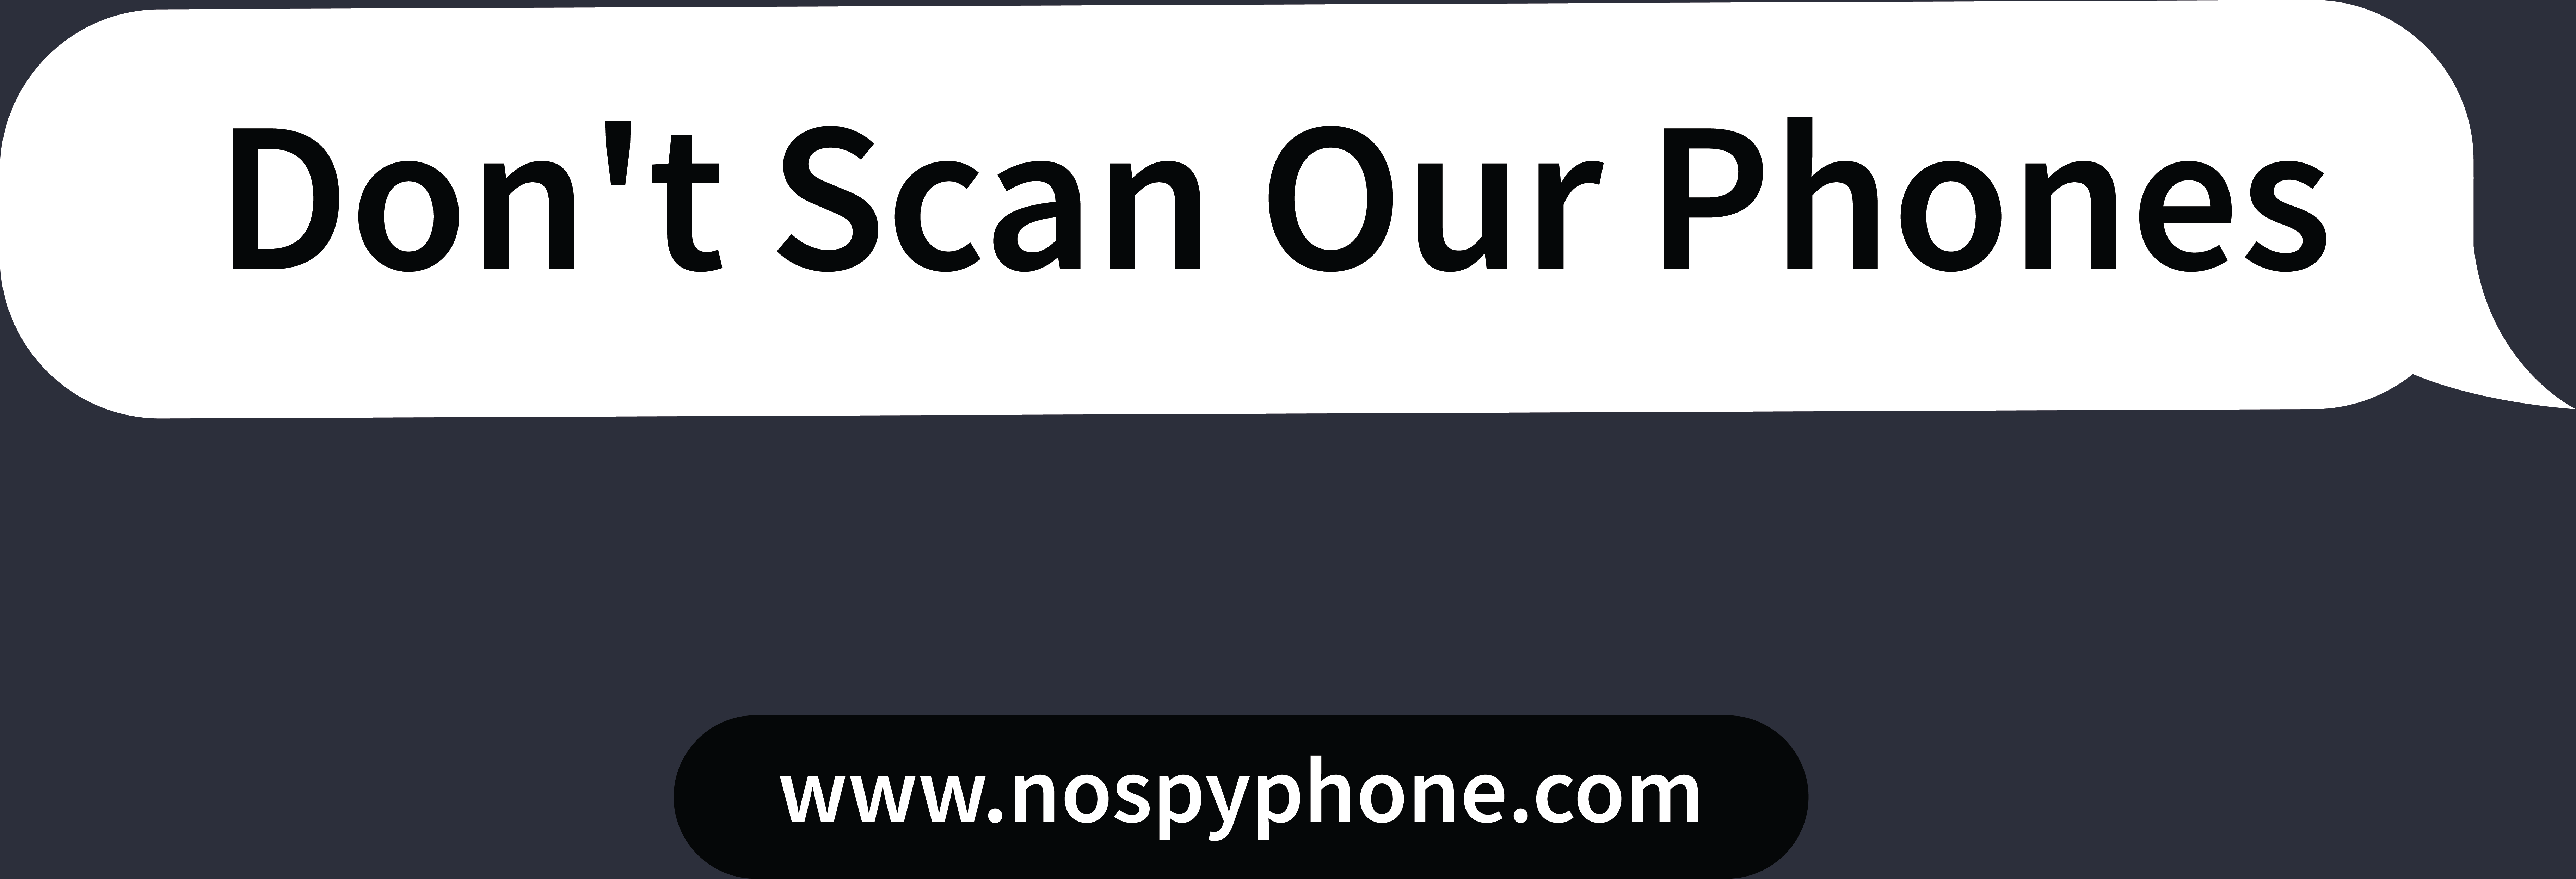 Don't Scan our Phones www.nosphyphone.com